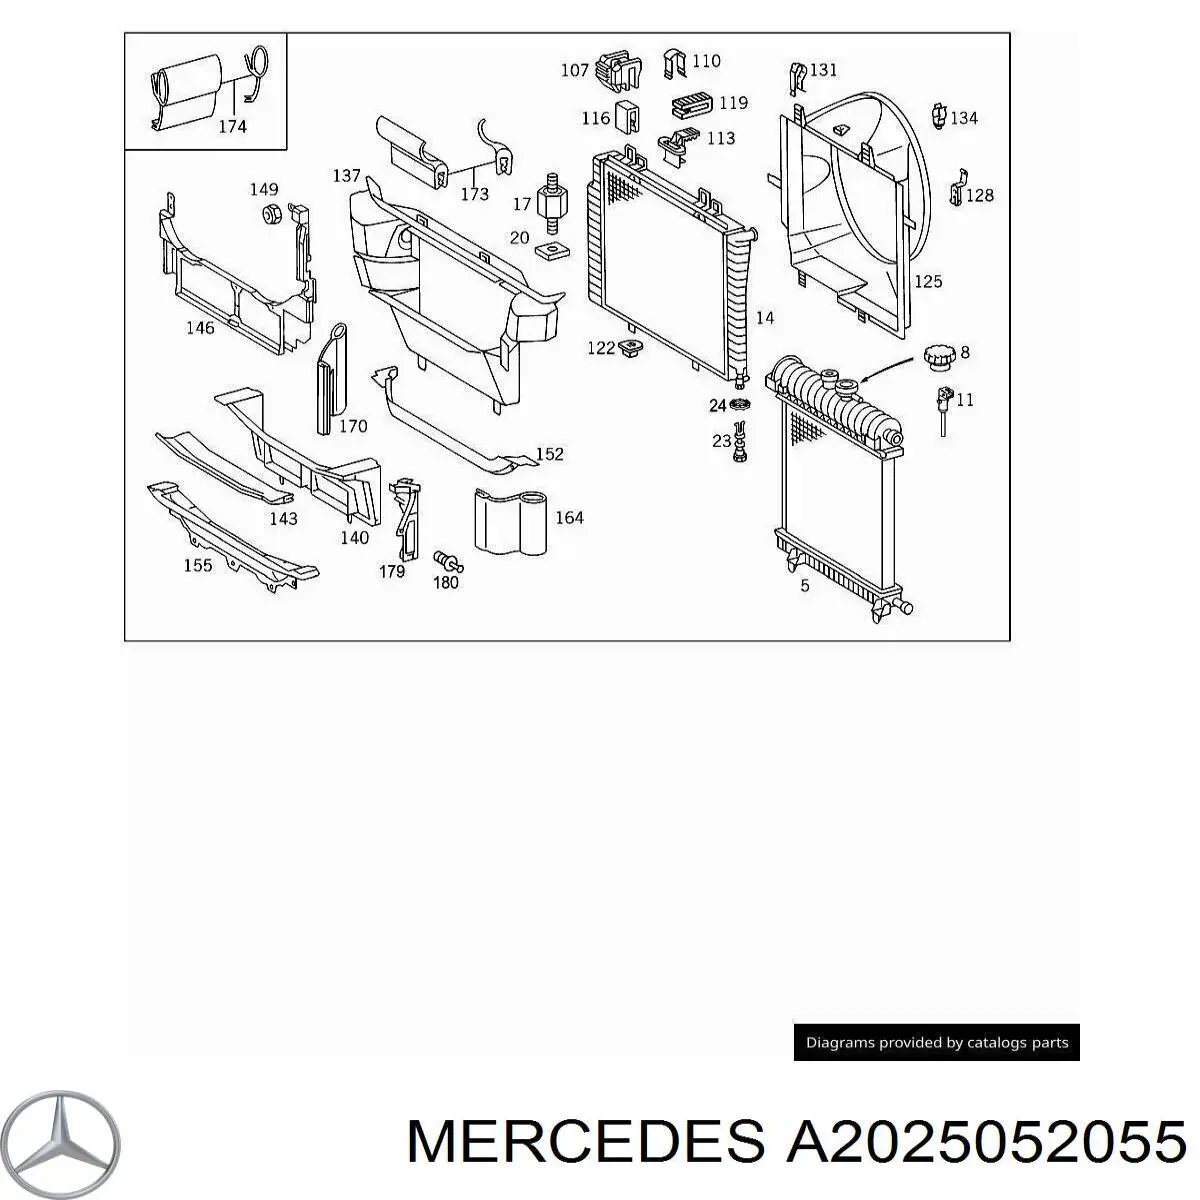 2025052055 Mercedes difusor do radiador de esfriamento